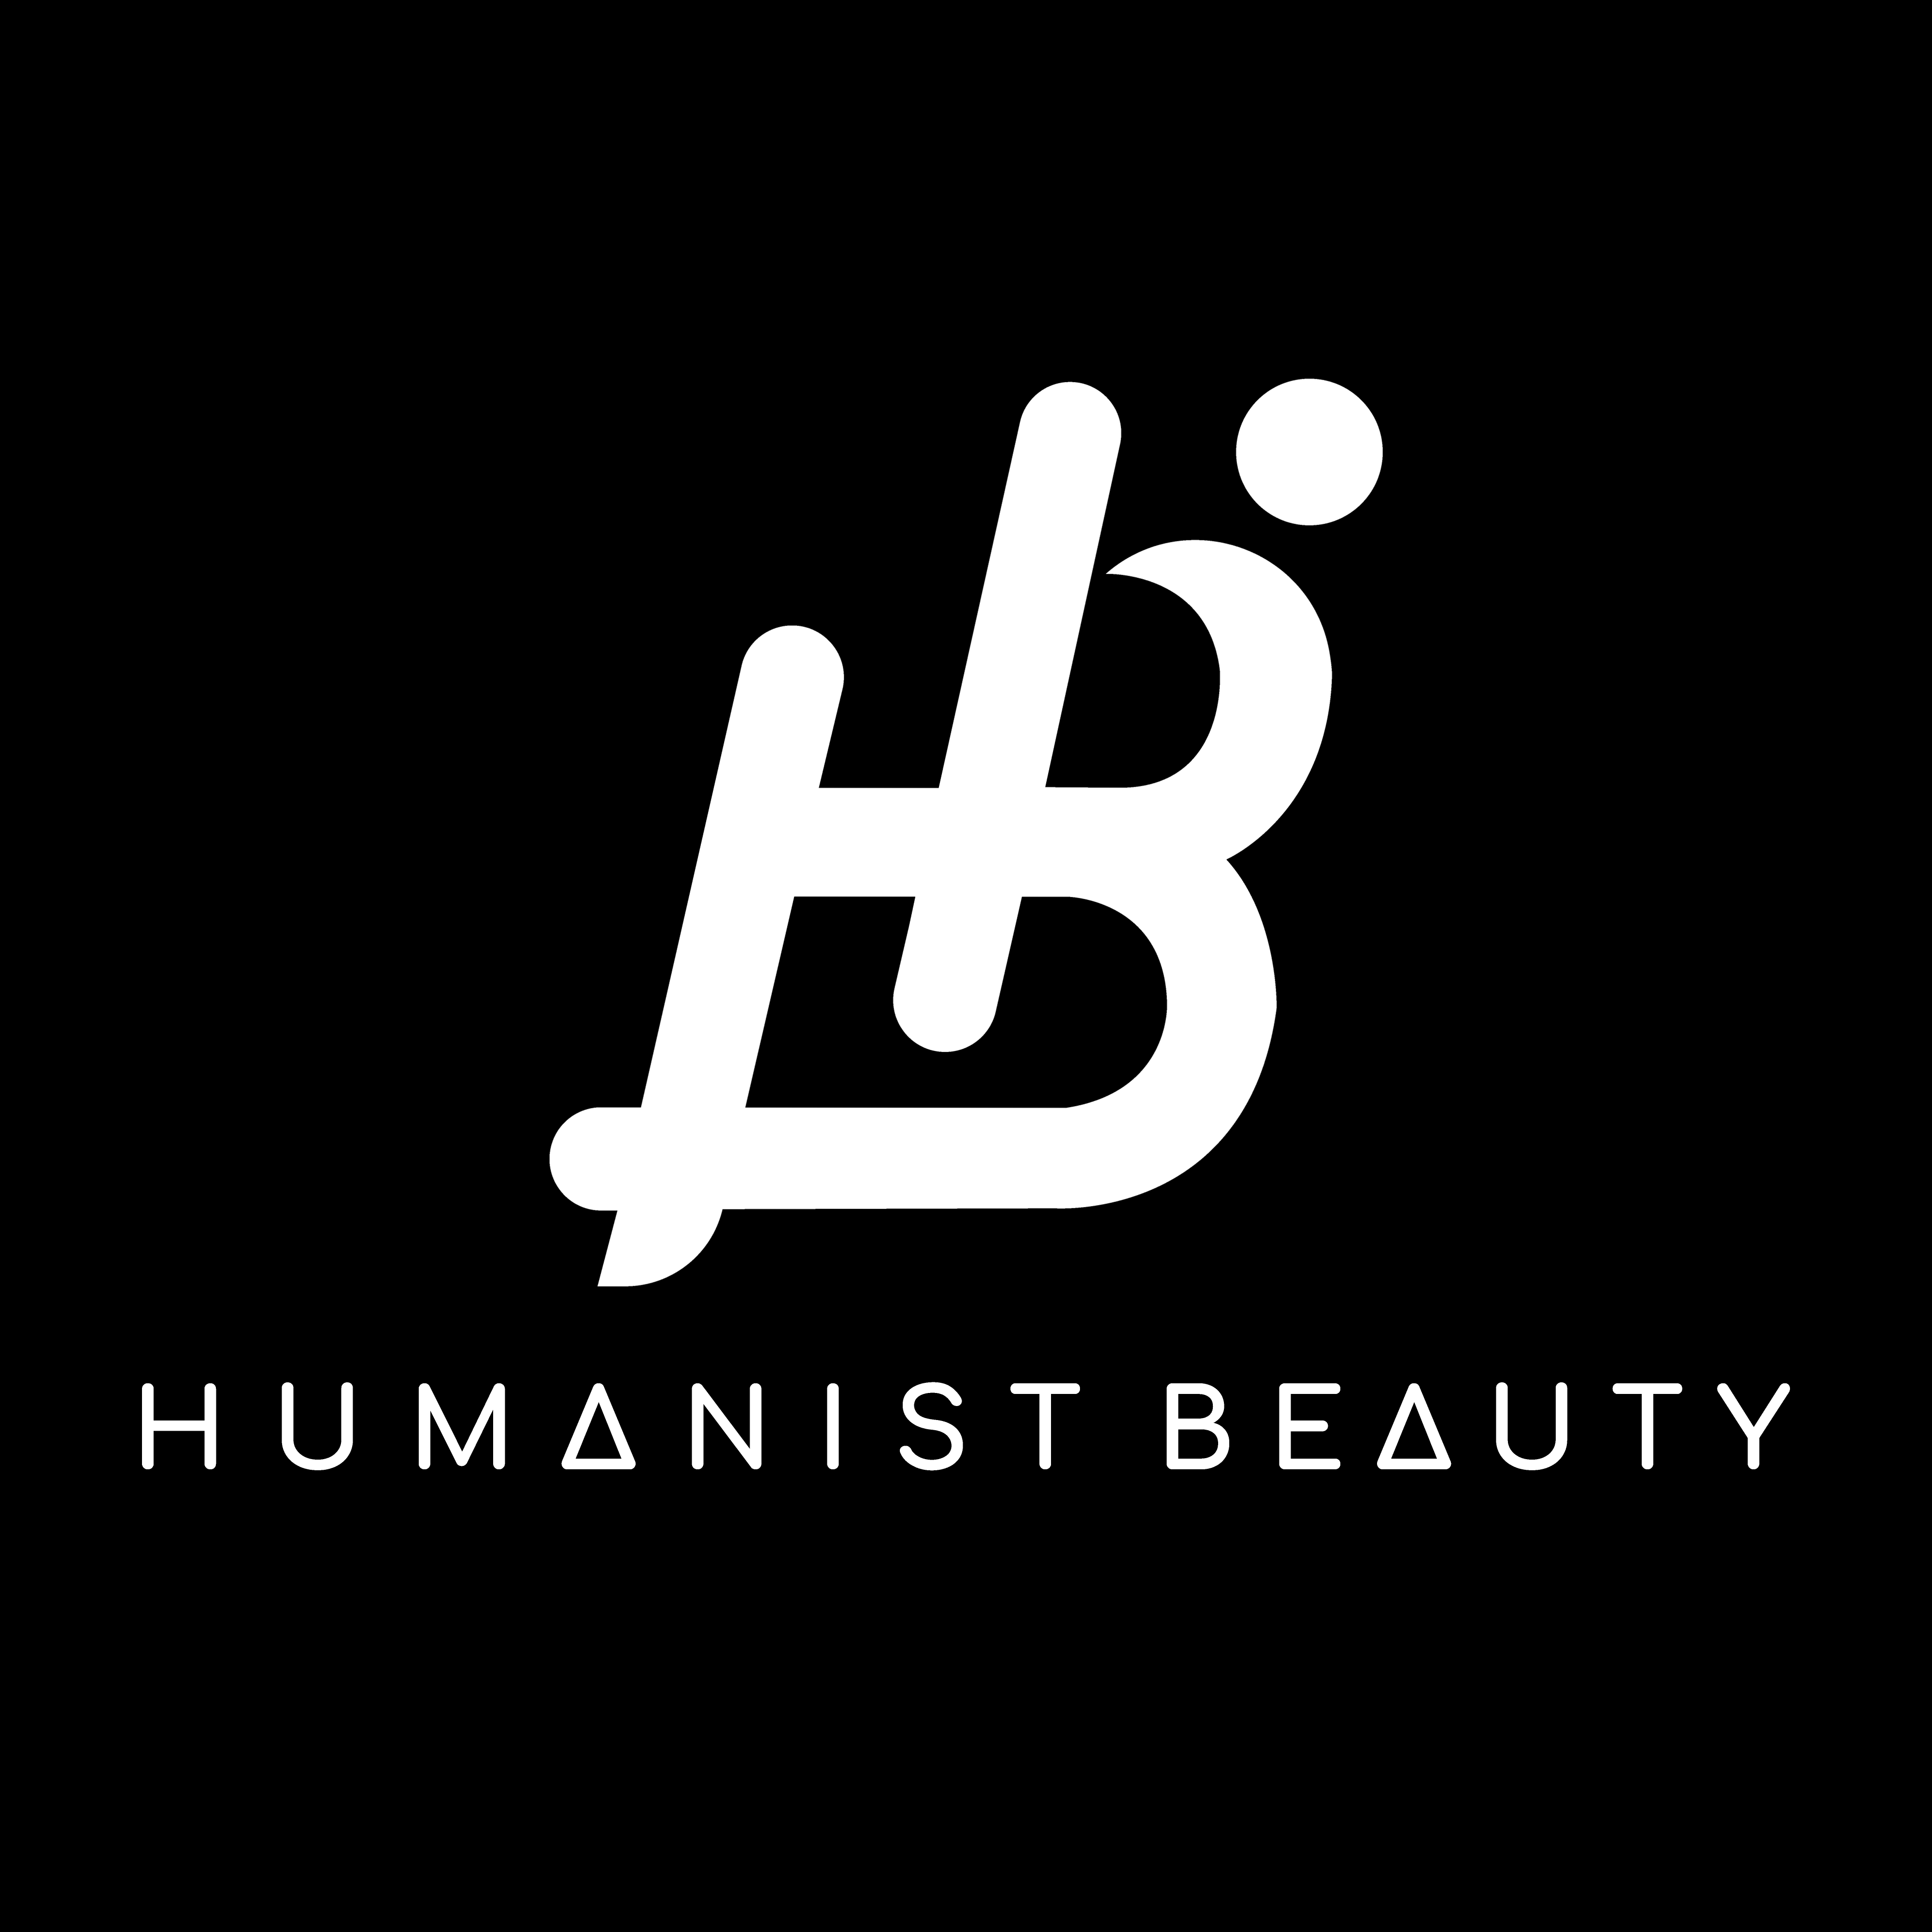 Humanist Beauty